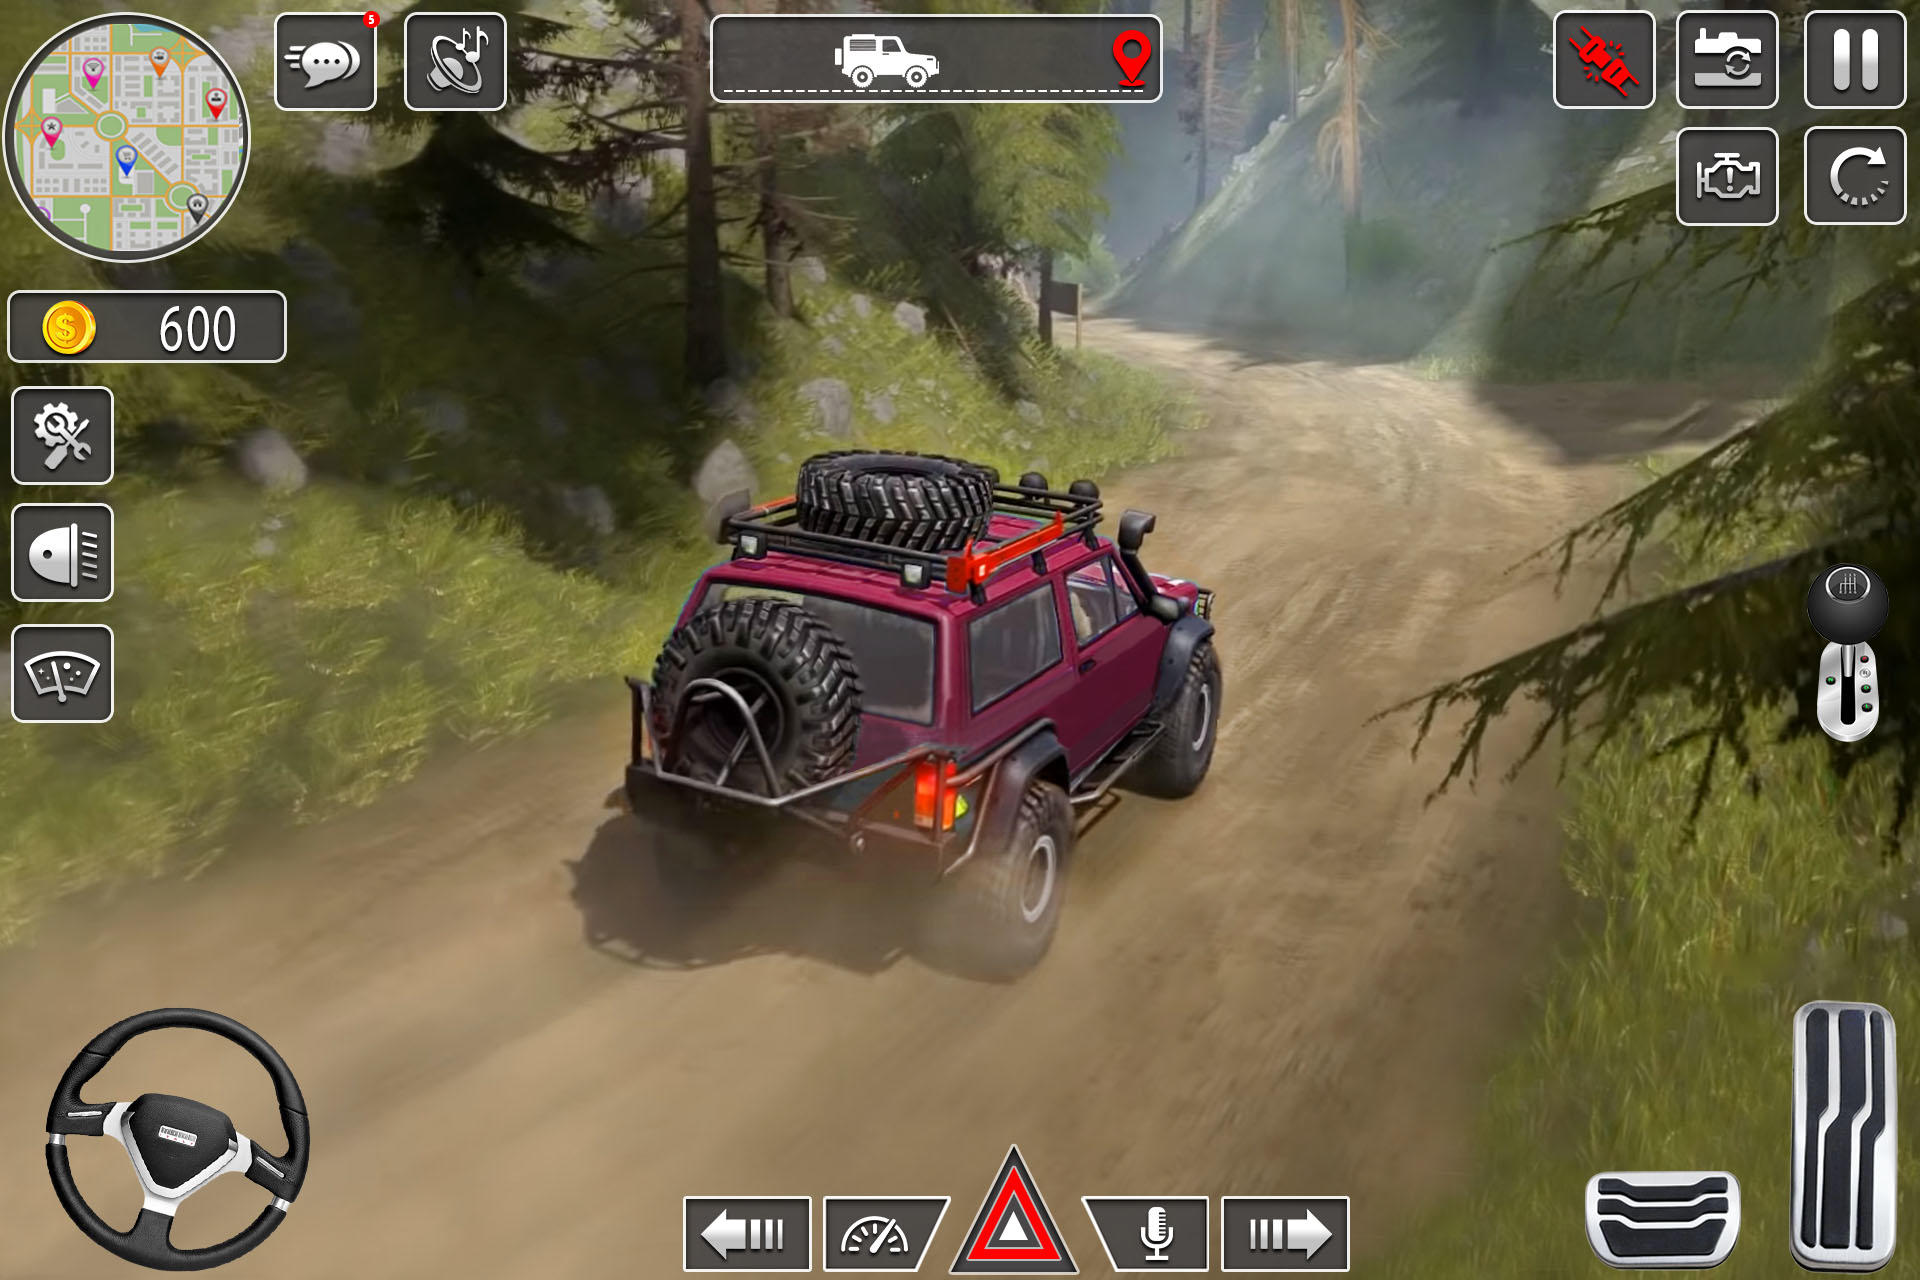 Screenshot 1 of Offroad-Schlamm-Jeep-Fahrspiel 0.1